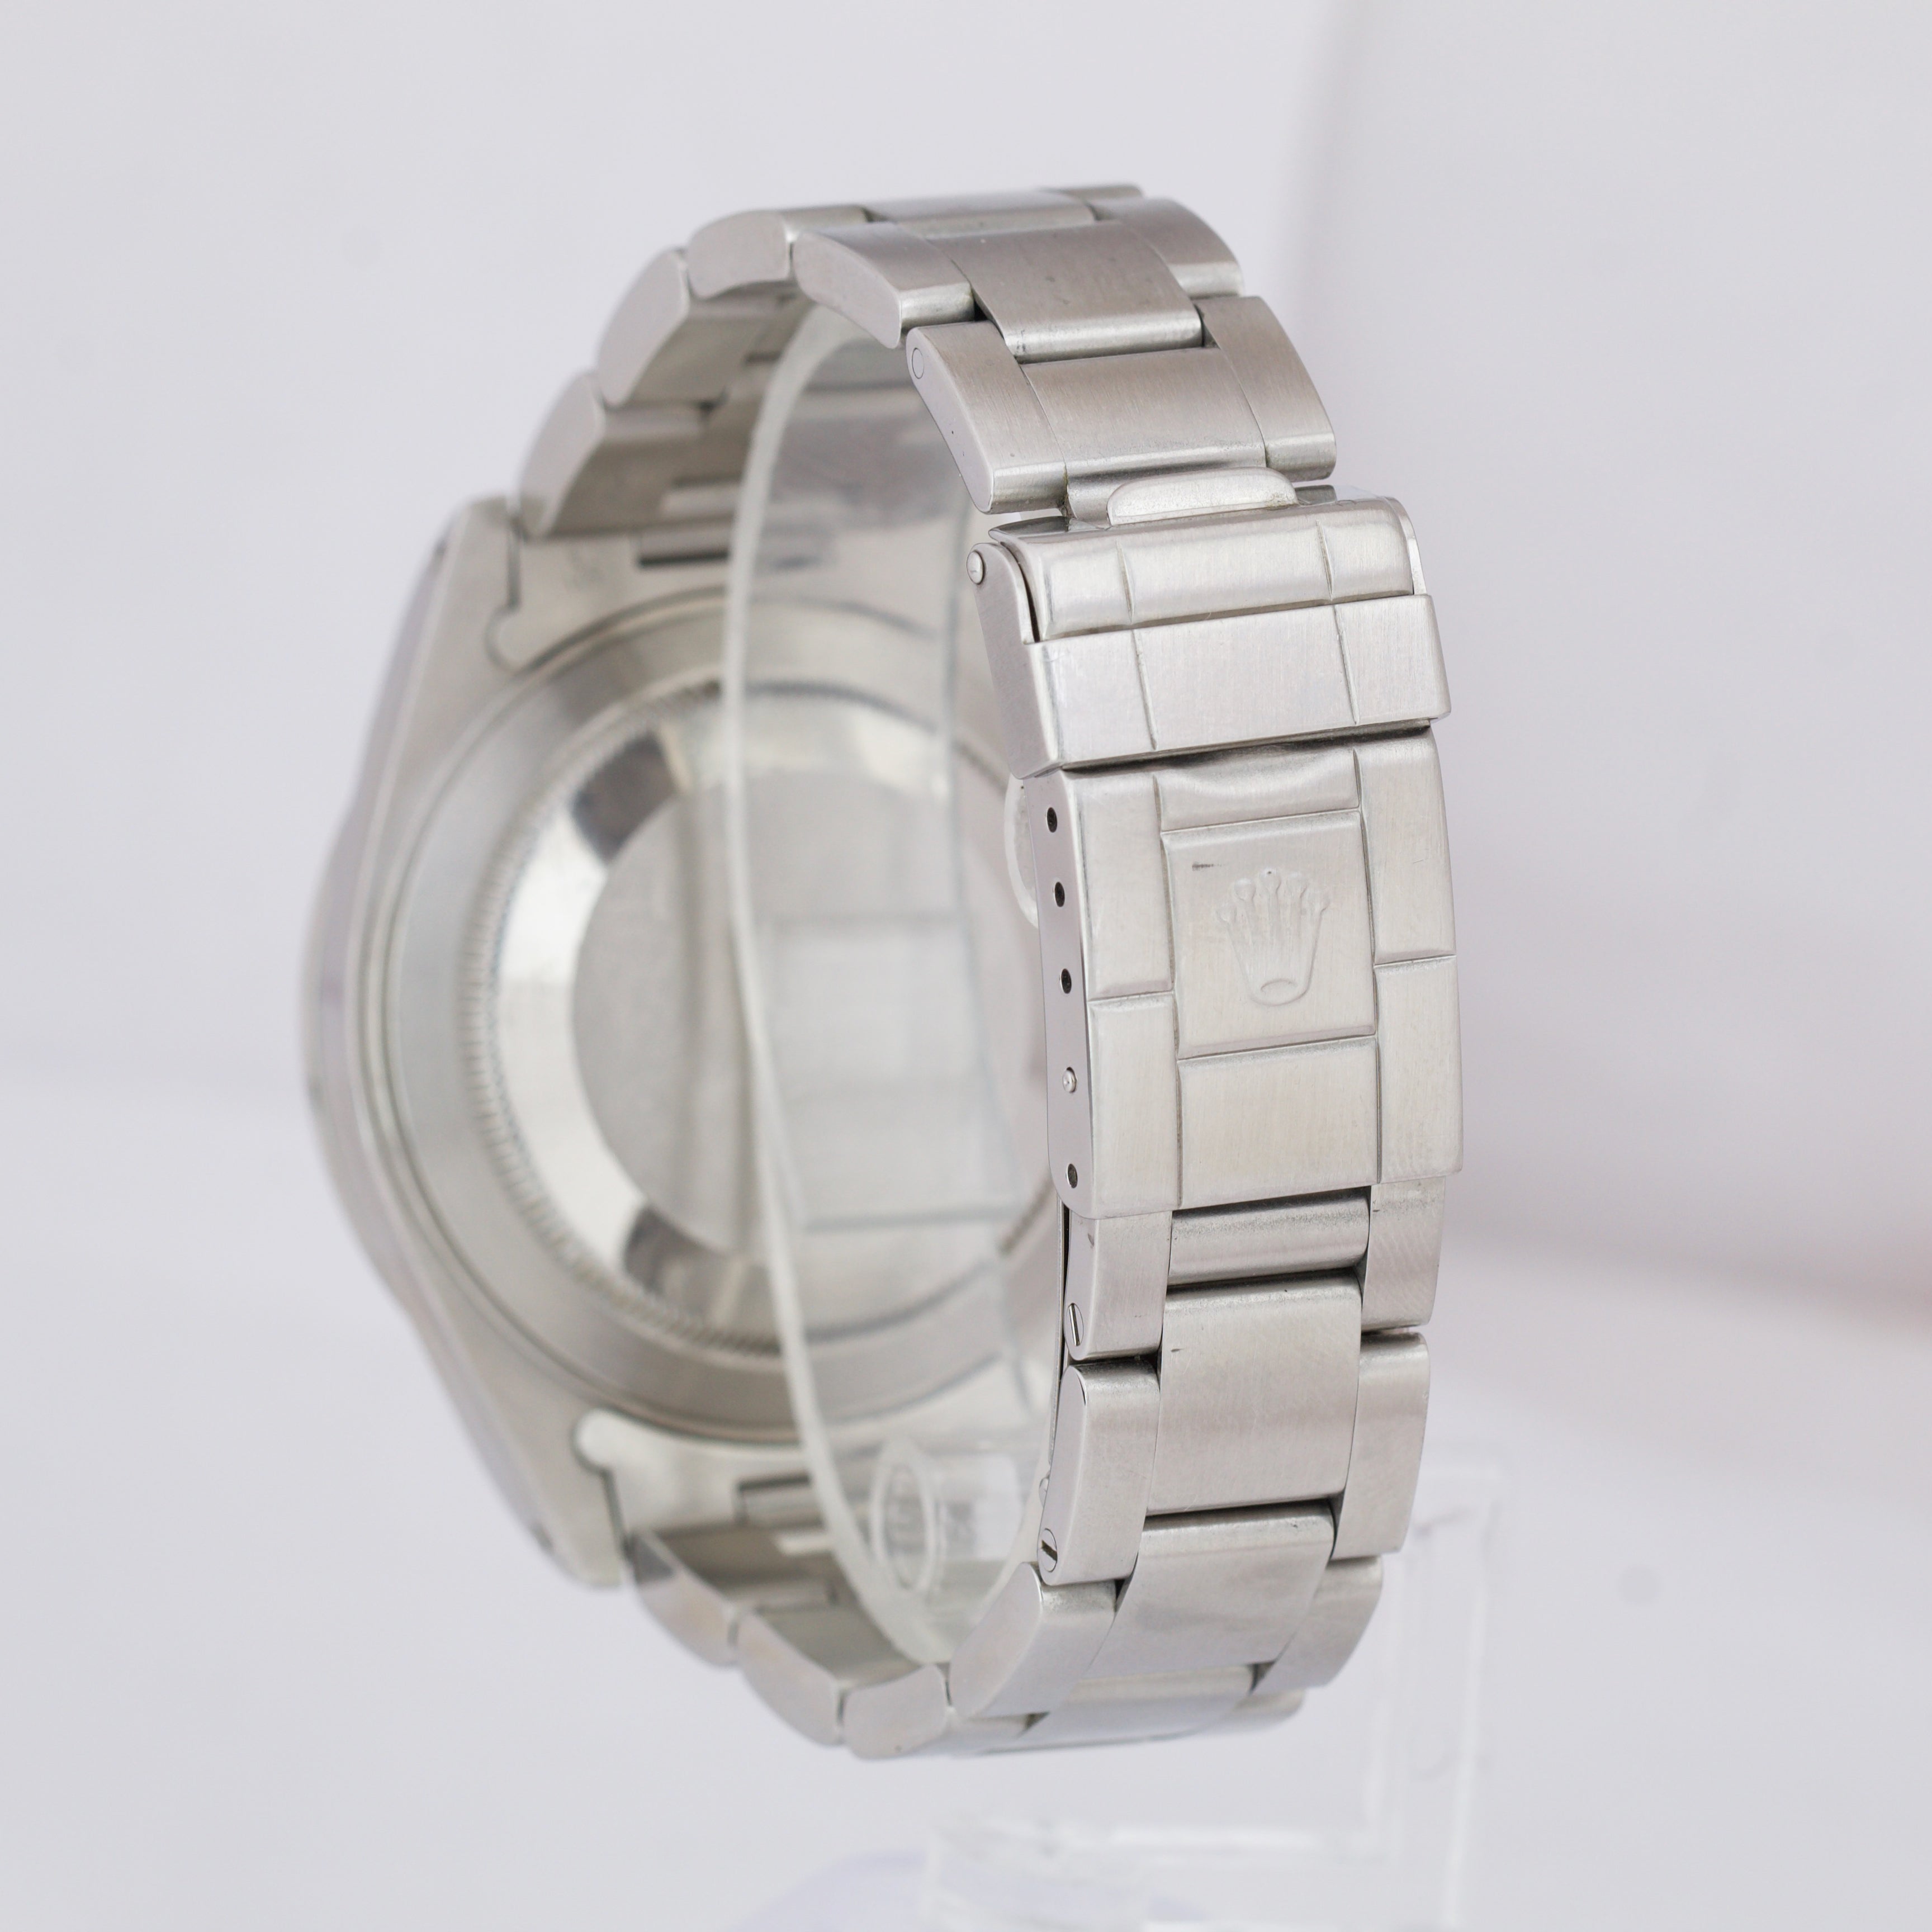 2000 Rolex Explorer II Stainless Steel Black Date 40mm Oyster Watch 16570 B+P